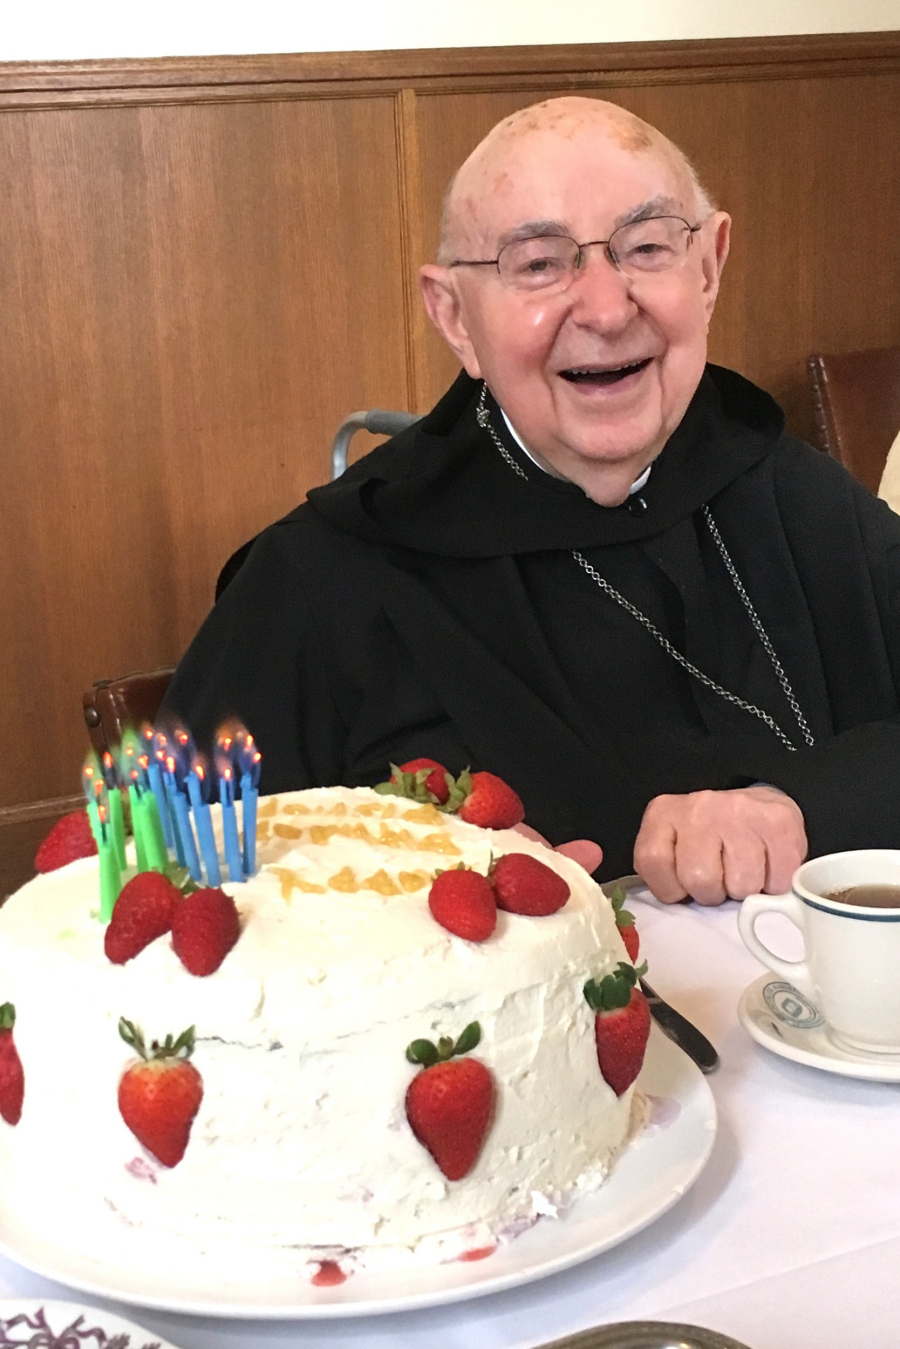 Bishop Joseph on his 90th birthday